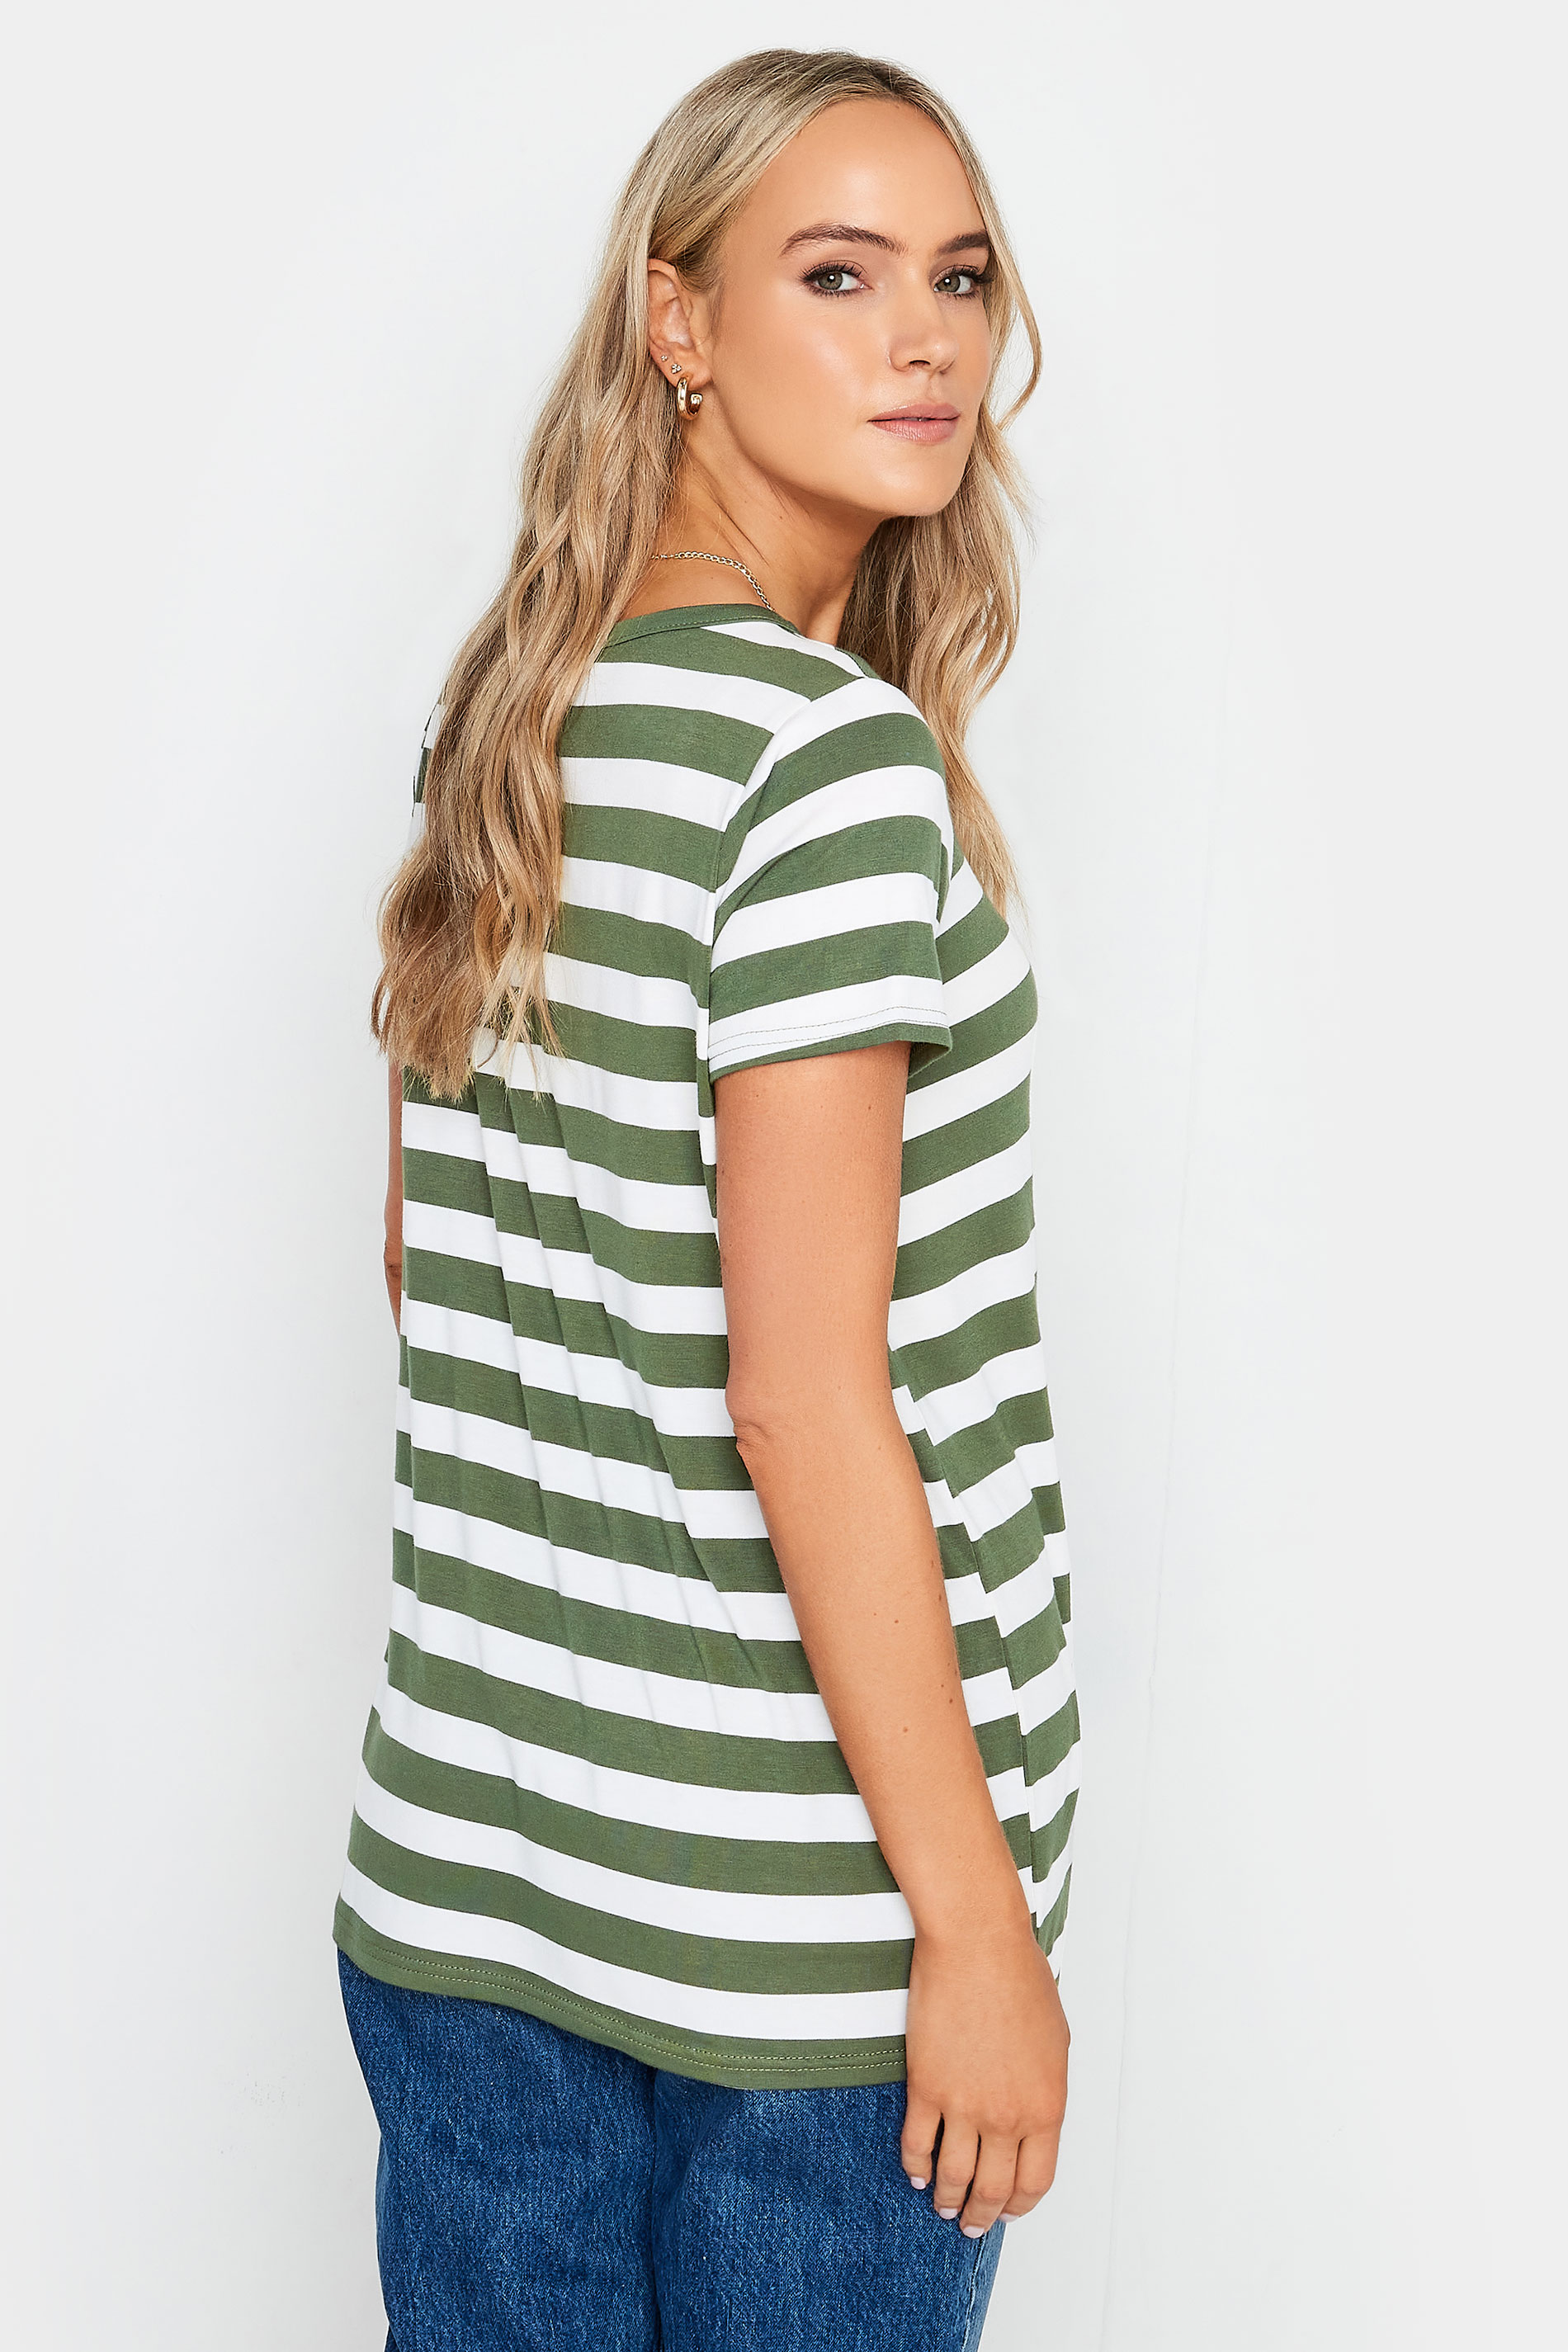 LTS Tall Khaki Green & White Stripe T-Shirt | Long Tall Sally 3